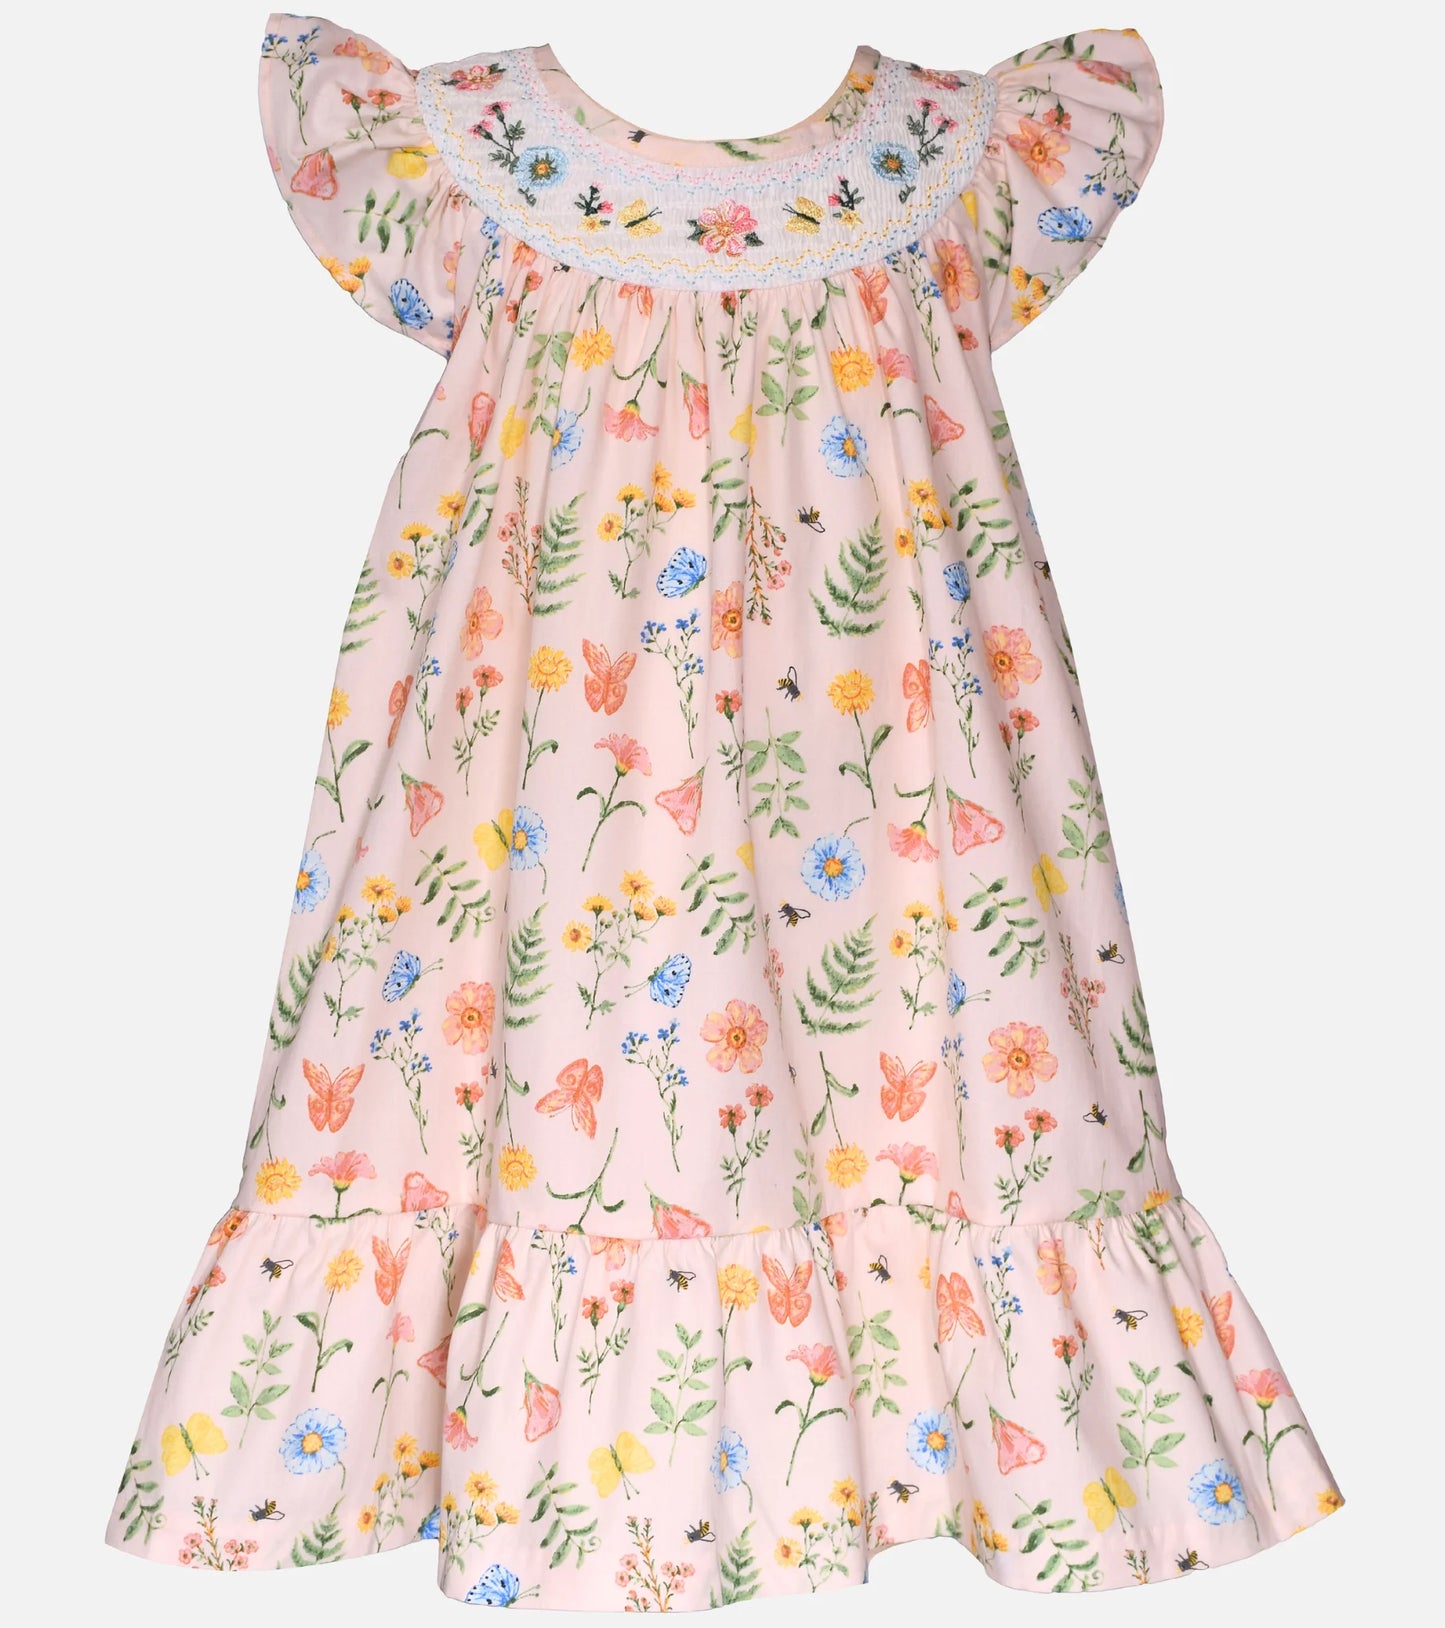 Bonnie Jean Mariposa Floral Butterfly Dress